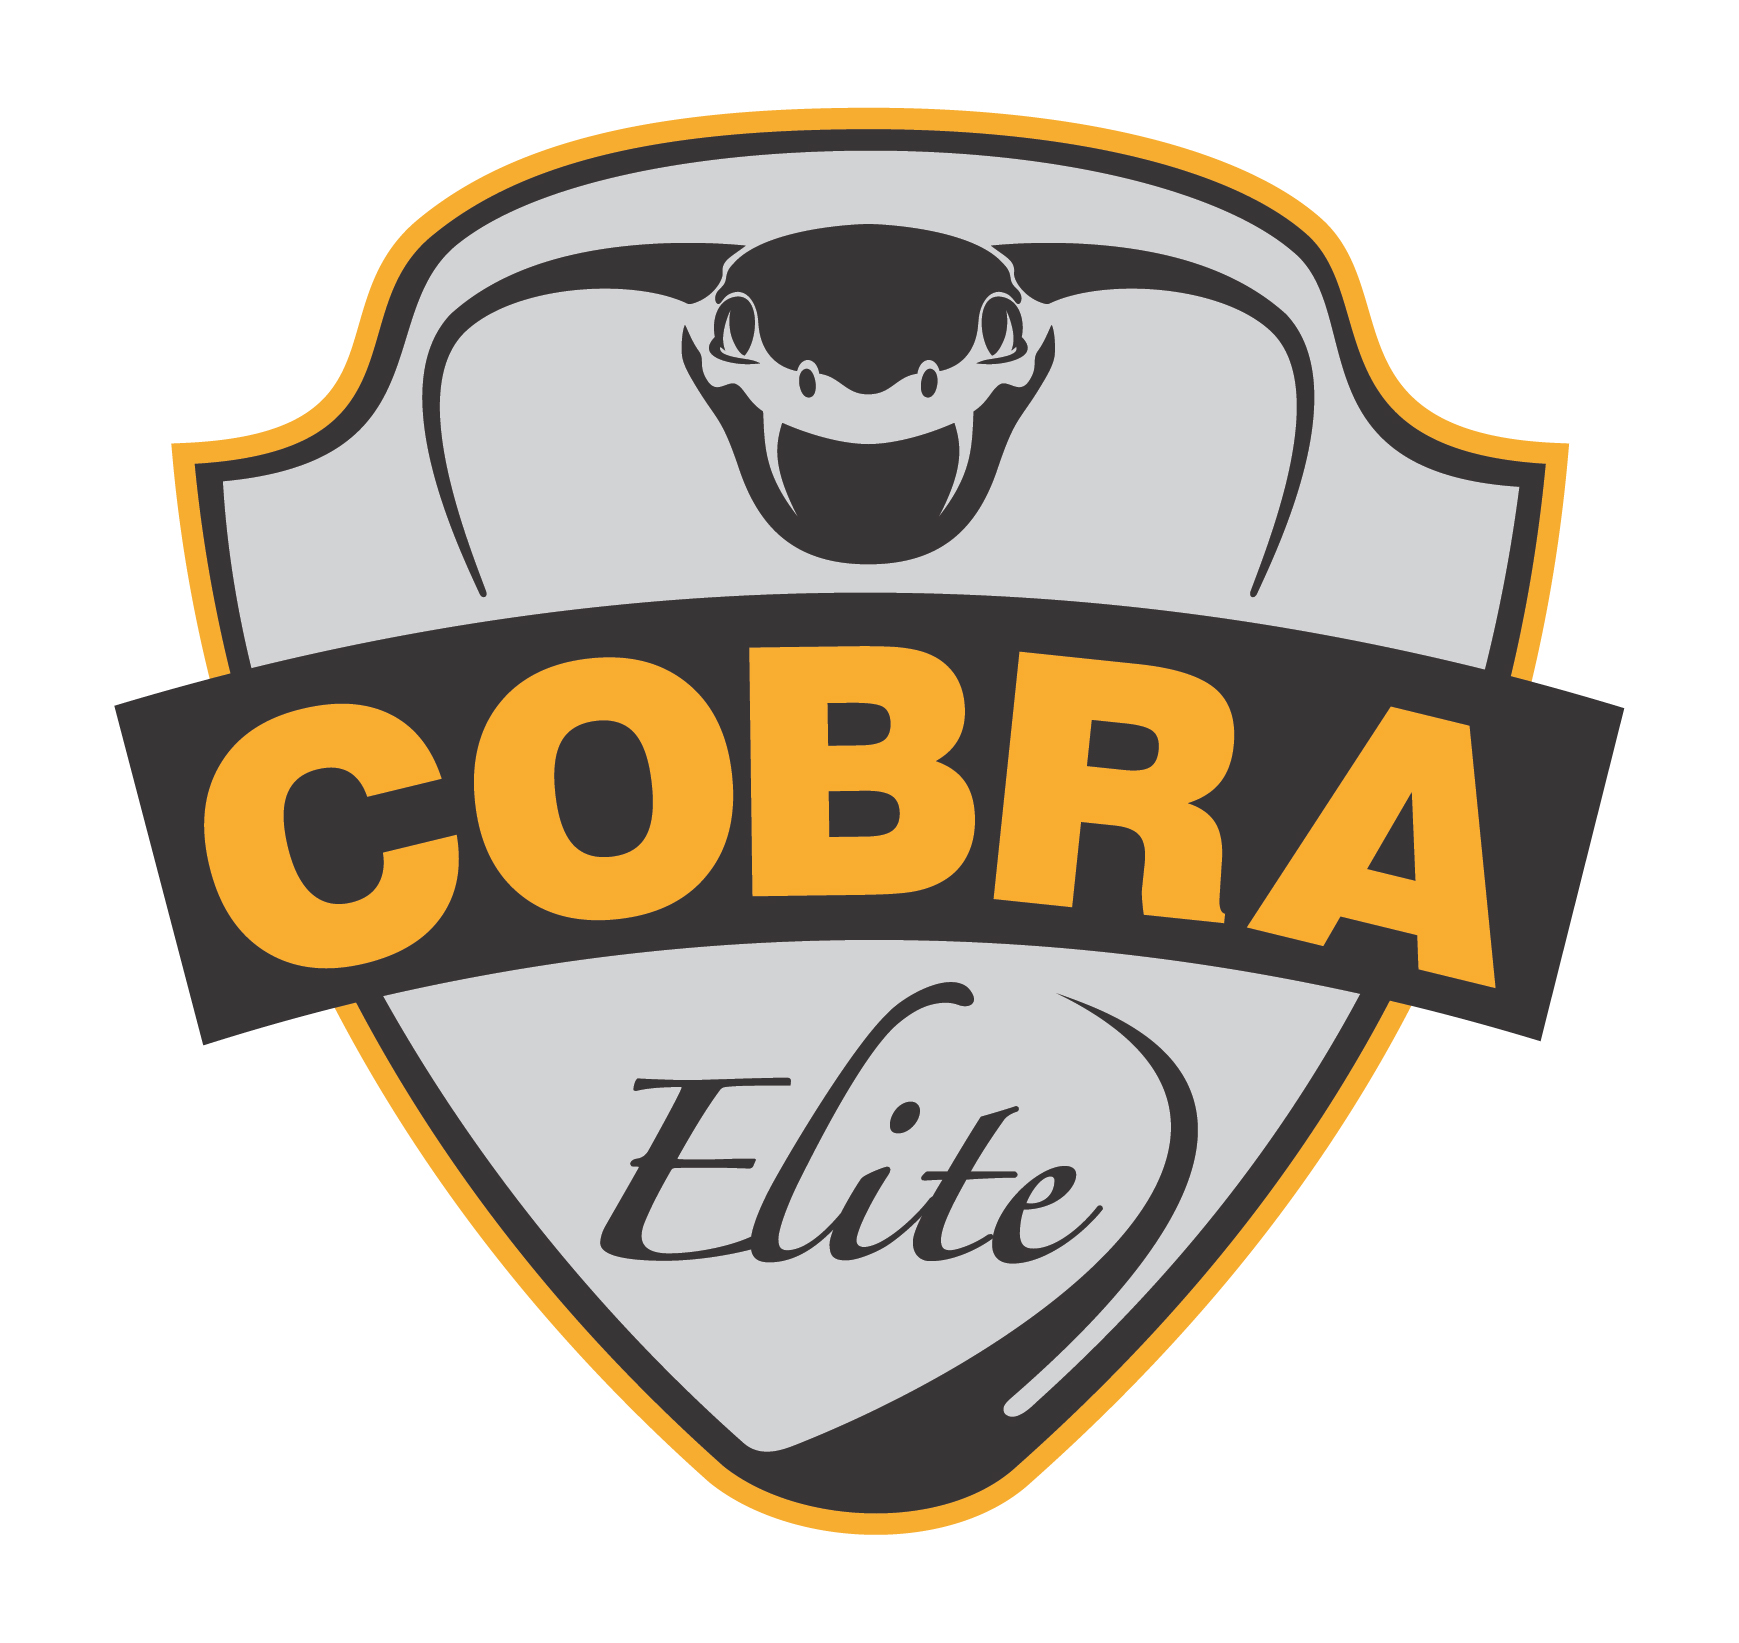 Cobra Elite